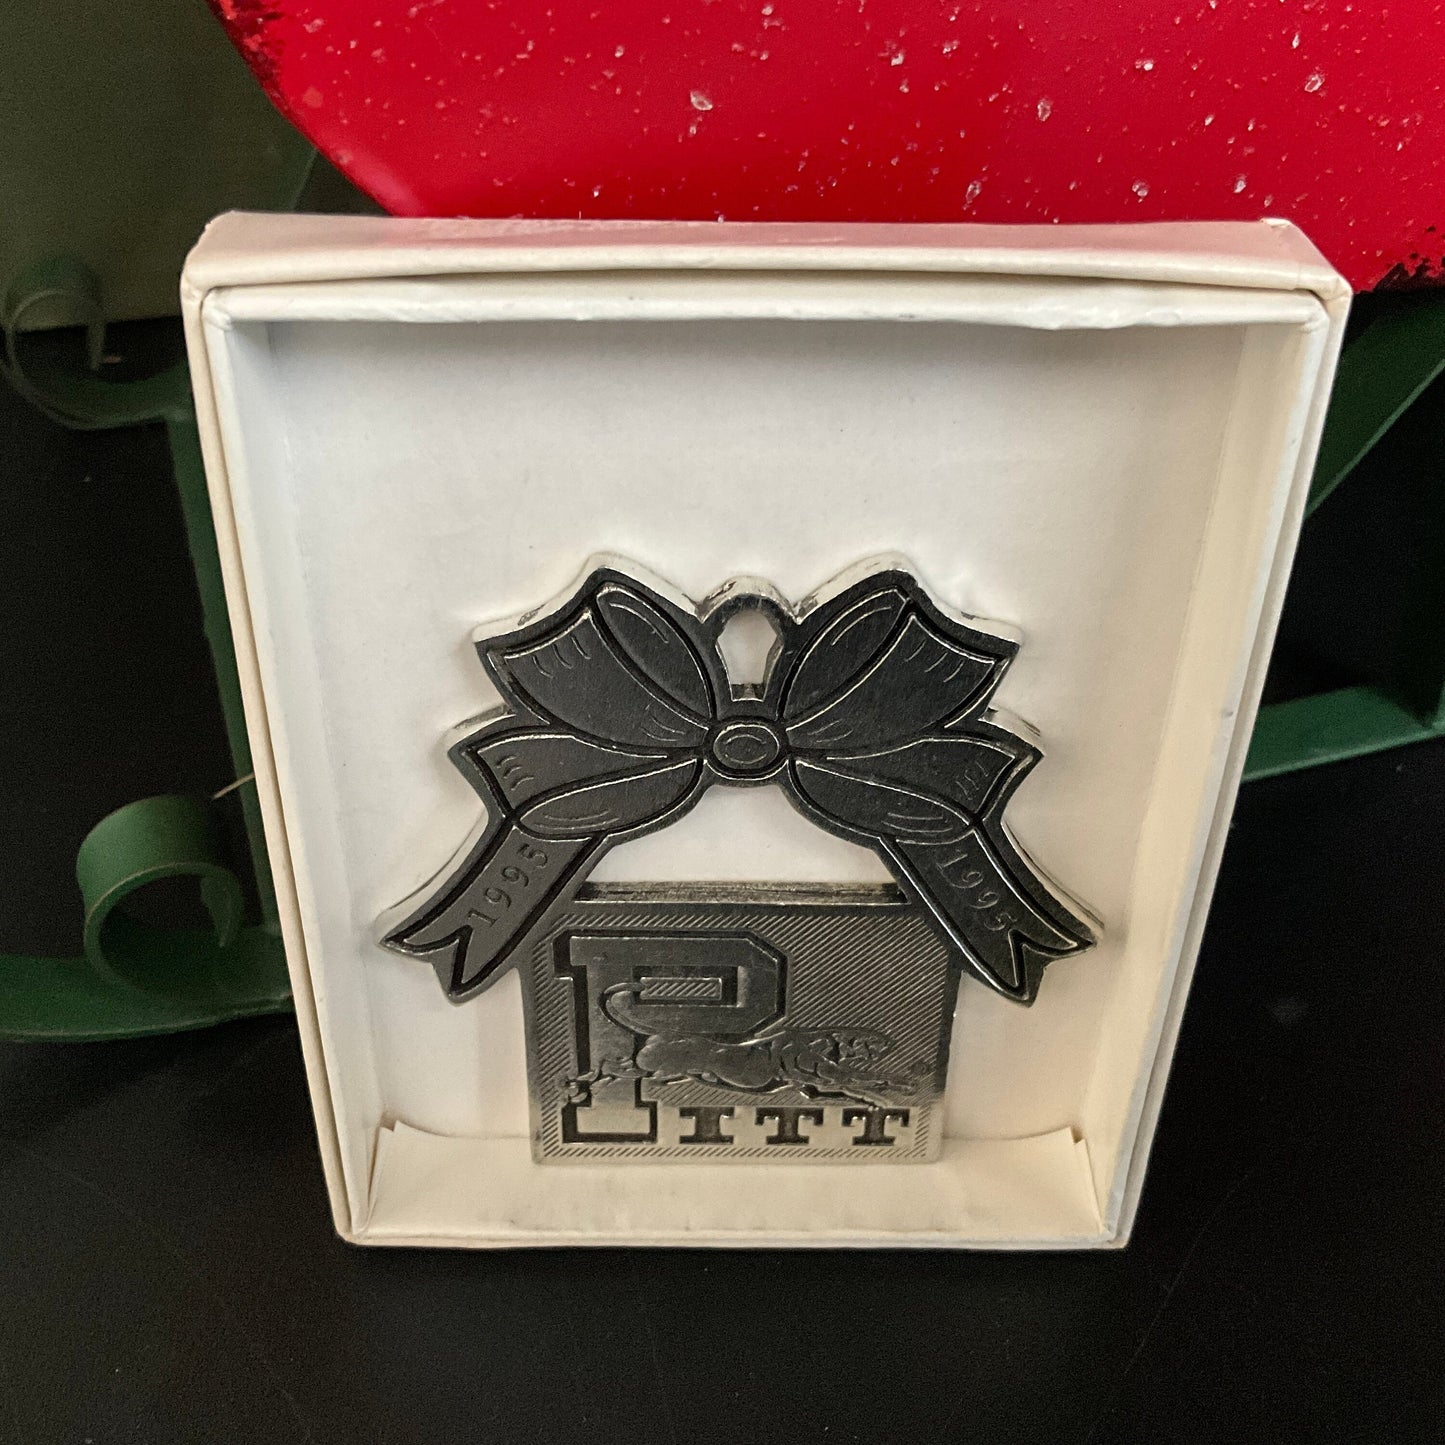 Pewter Pitt Dated 1995 University of Pittsburg Christmas ornament